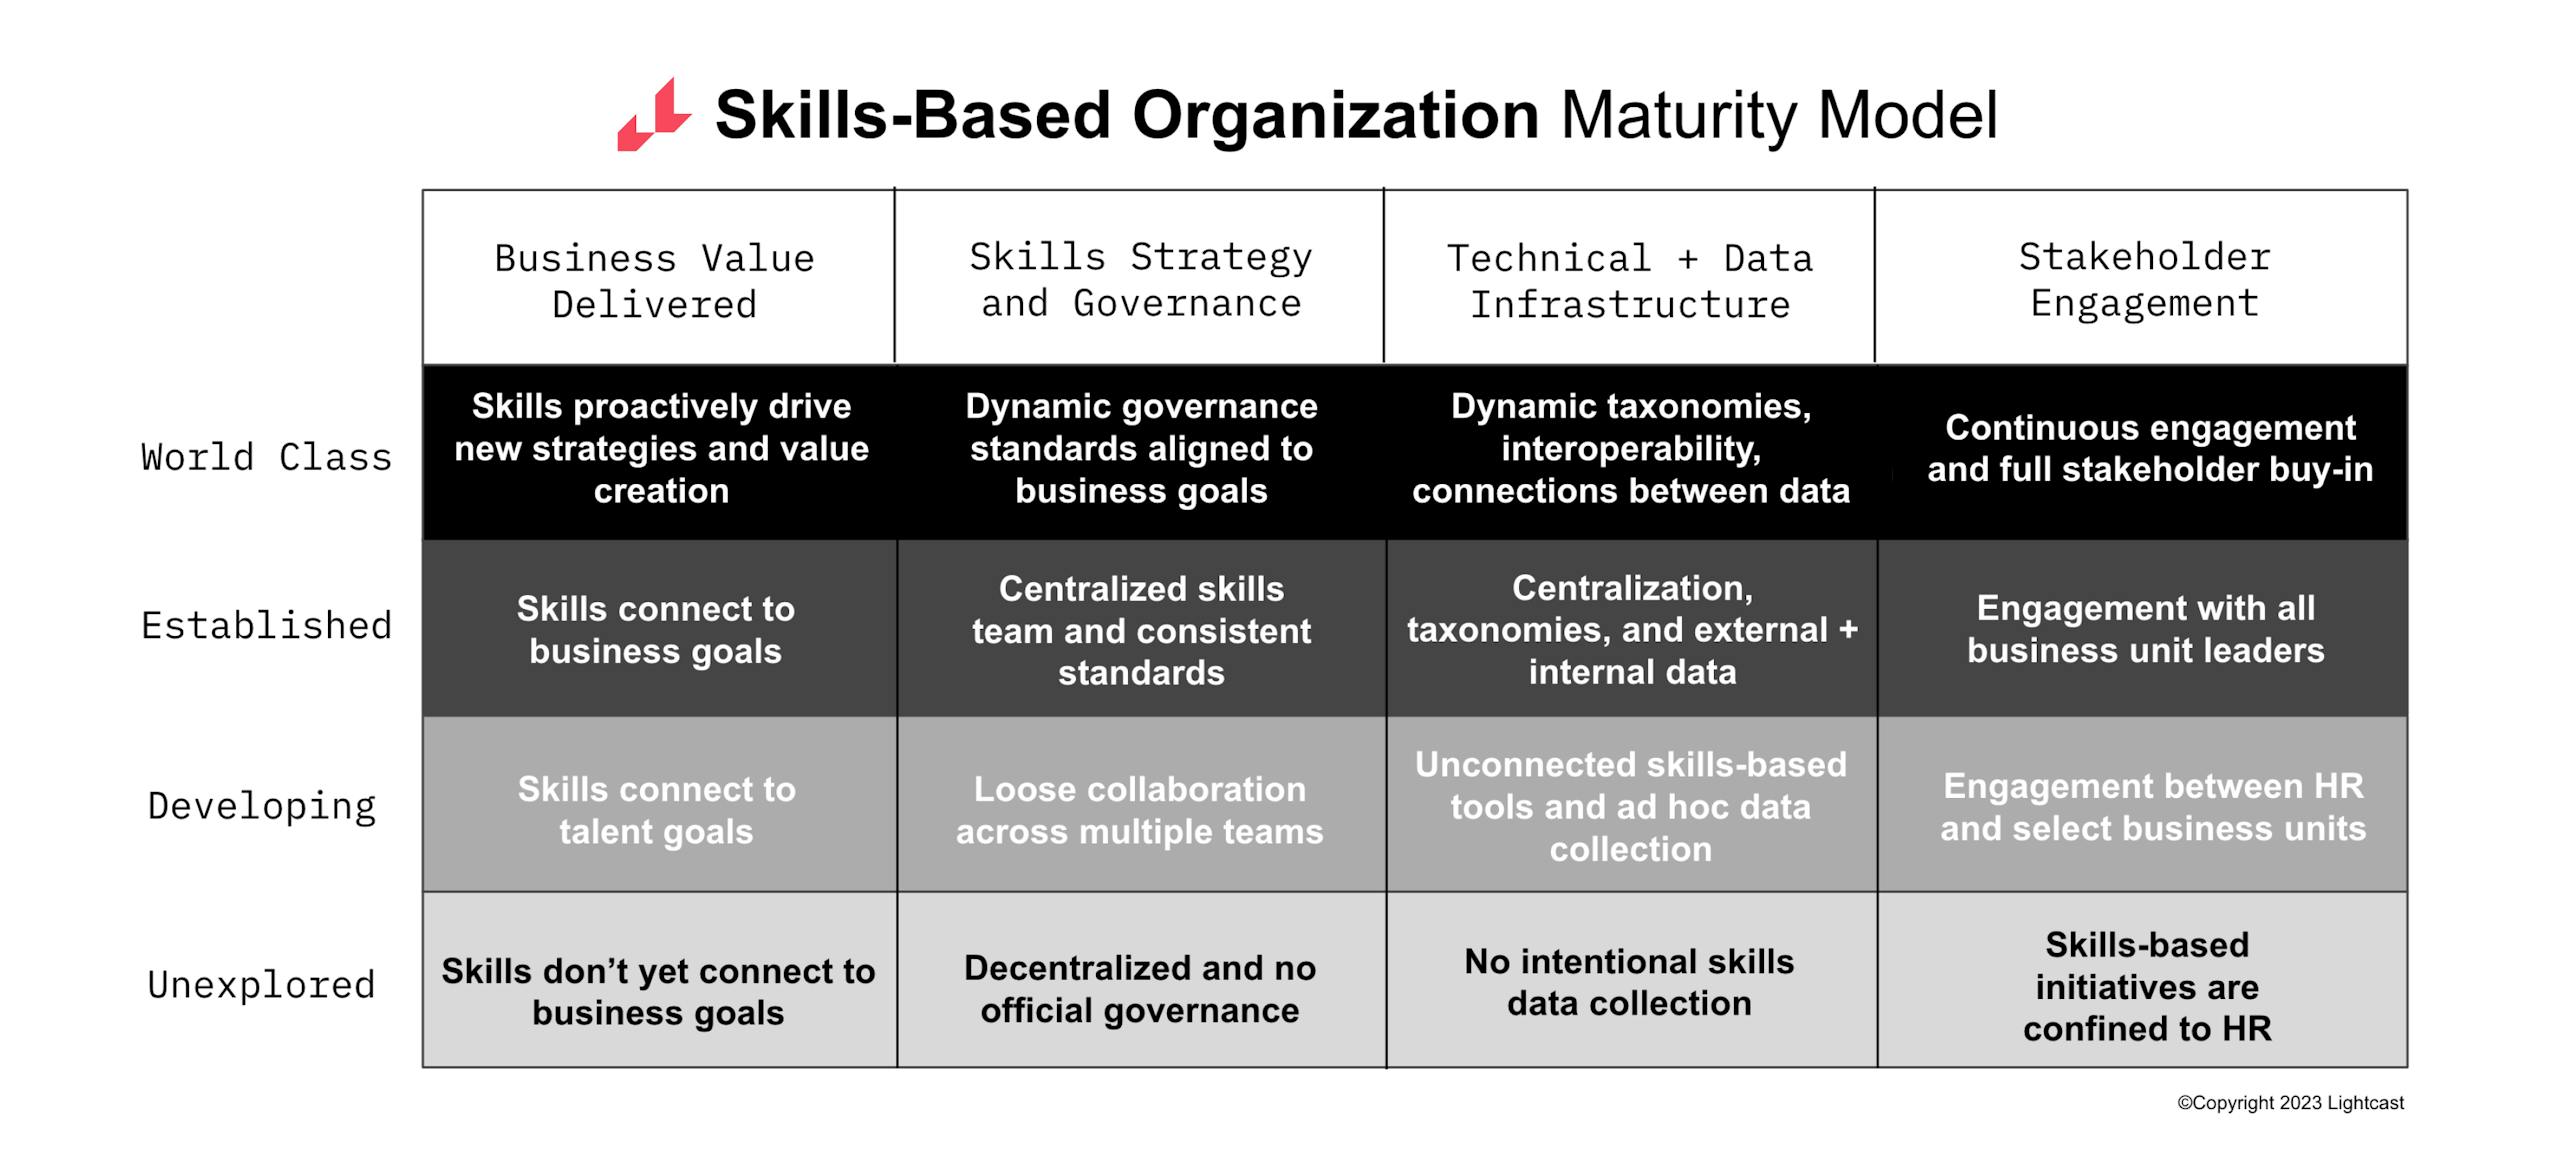 Skills-Based Organization Maturity Model